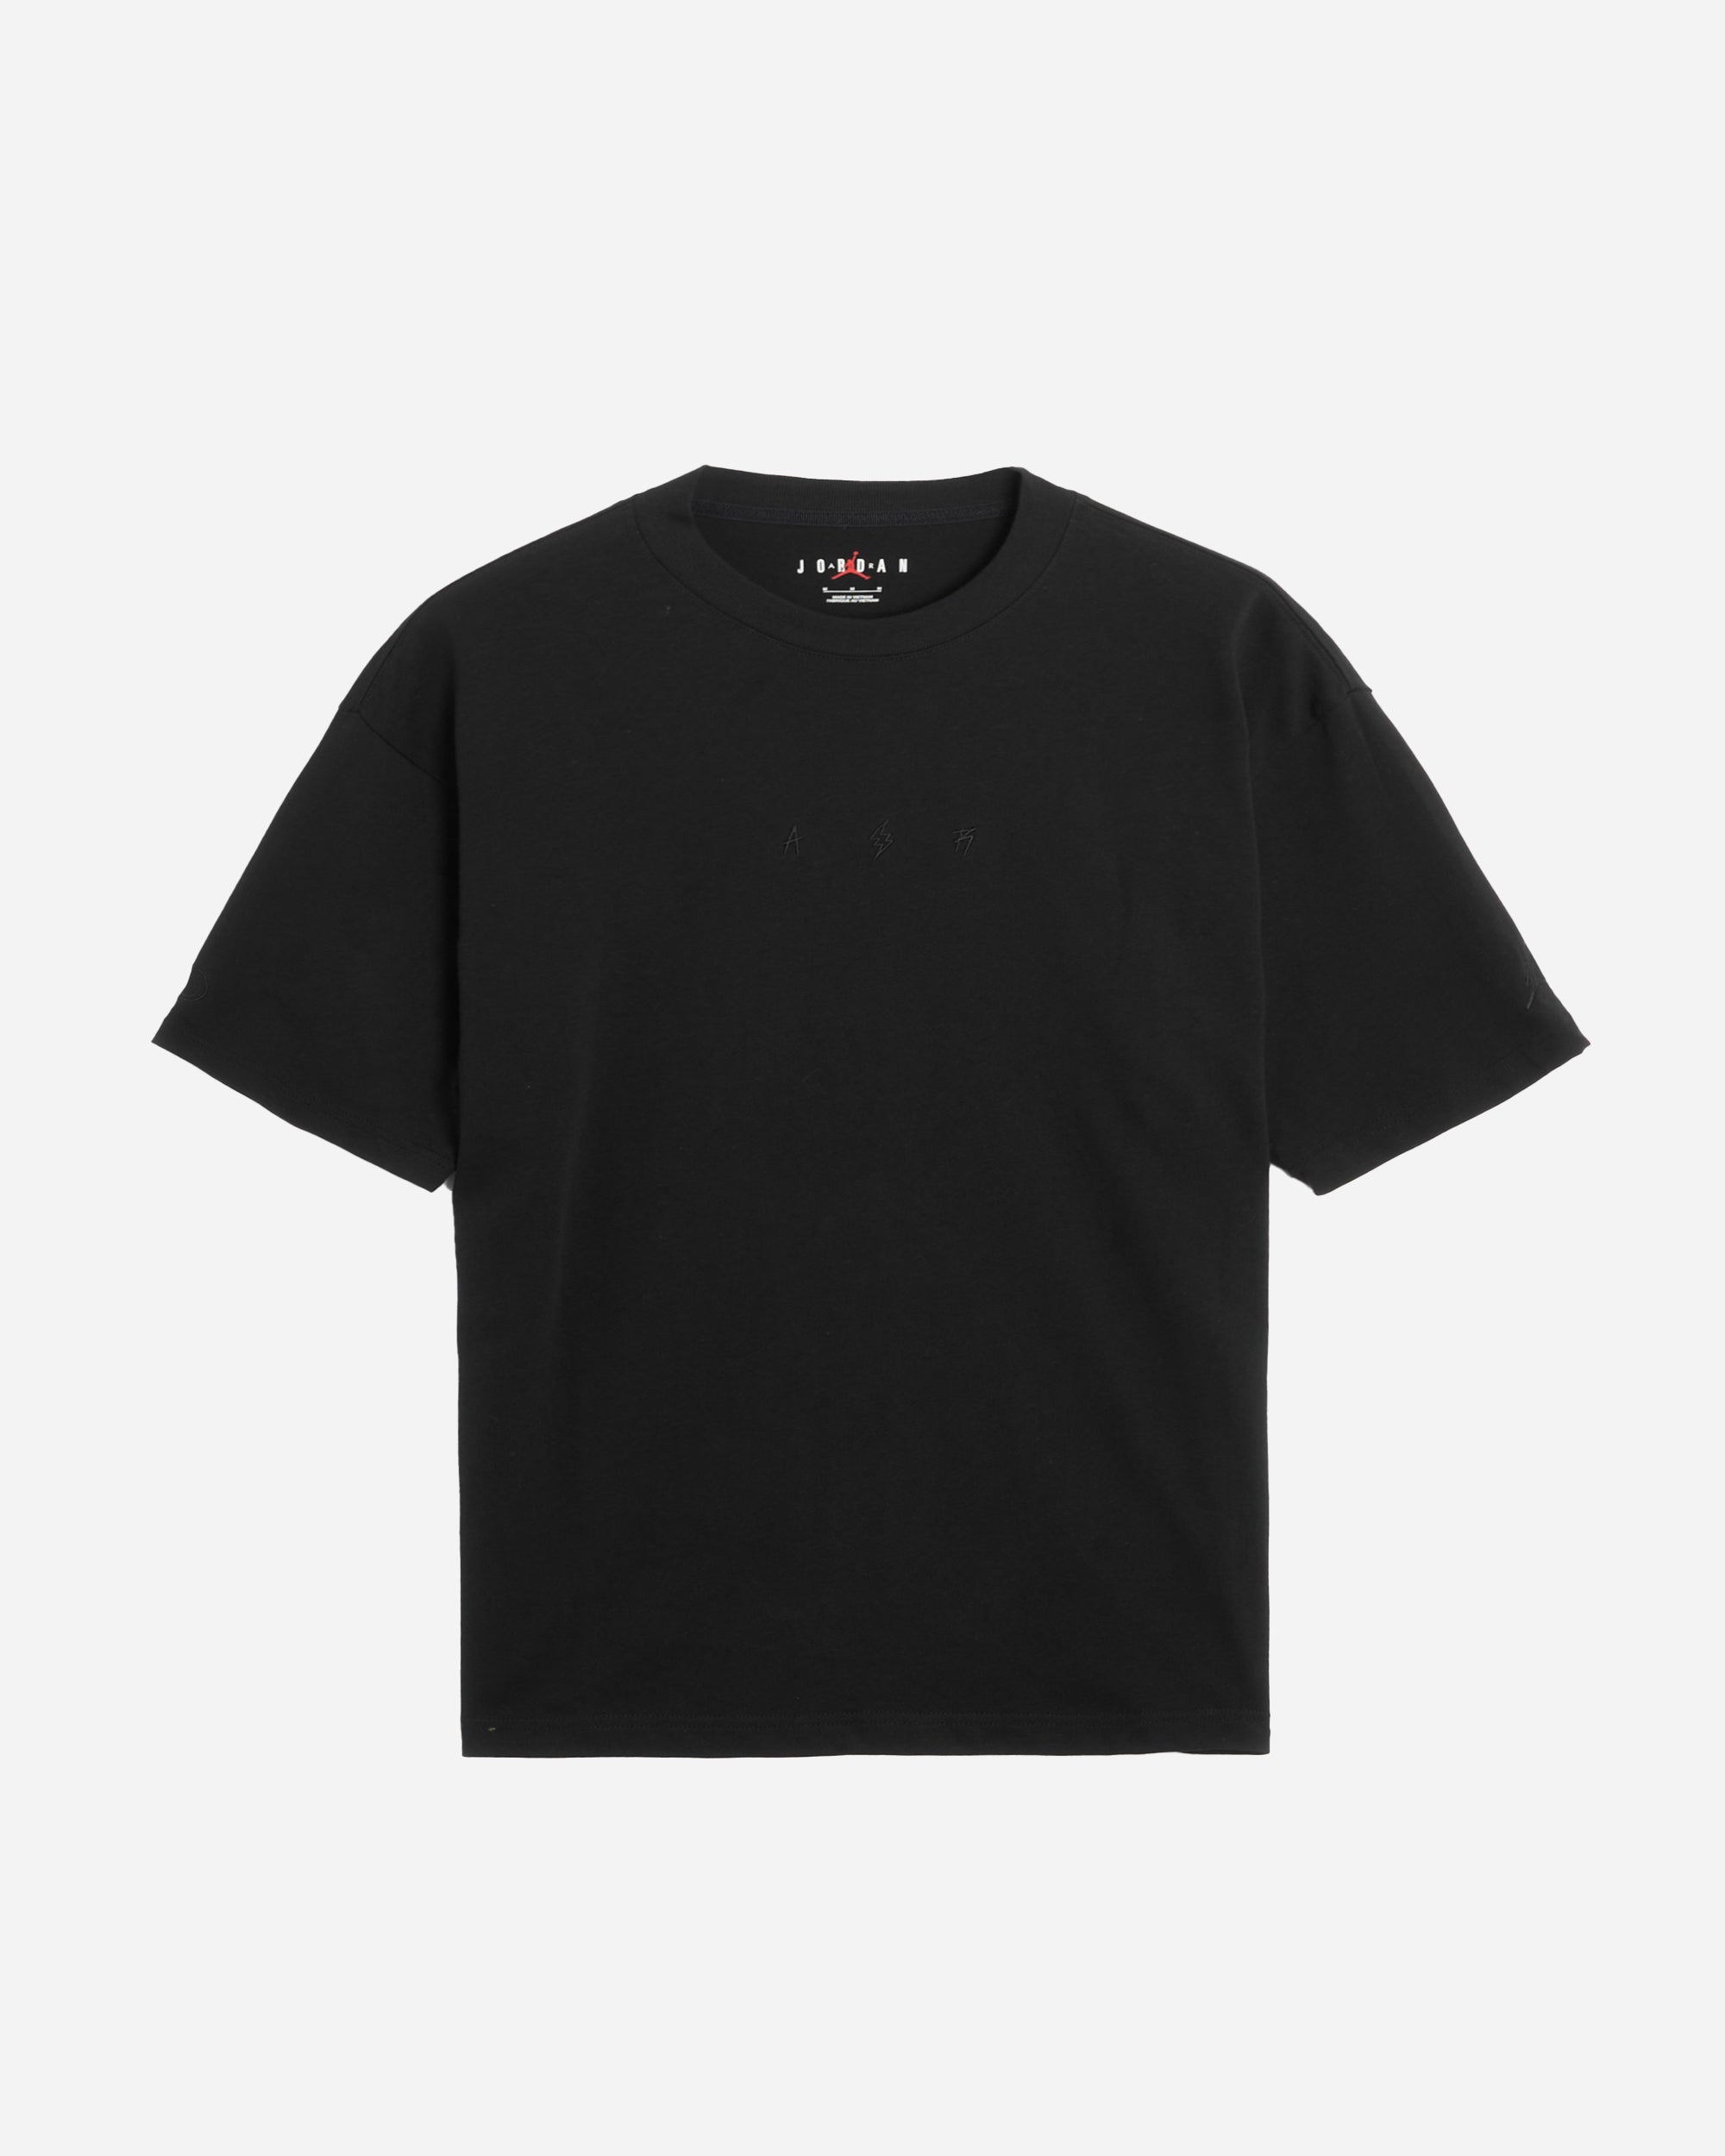 Jordan Brand Jordan x J Balvin T-shirt Solid BLACK FV1379-010